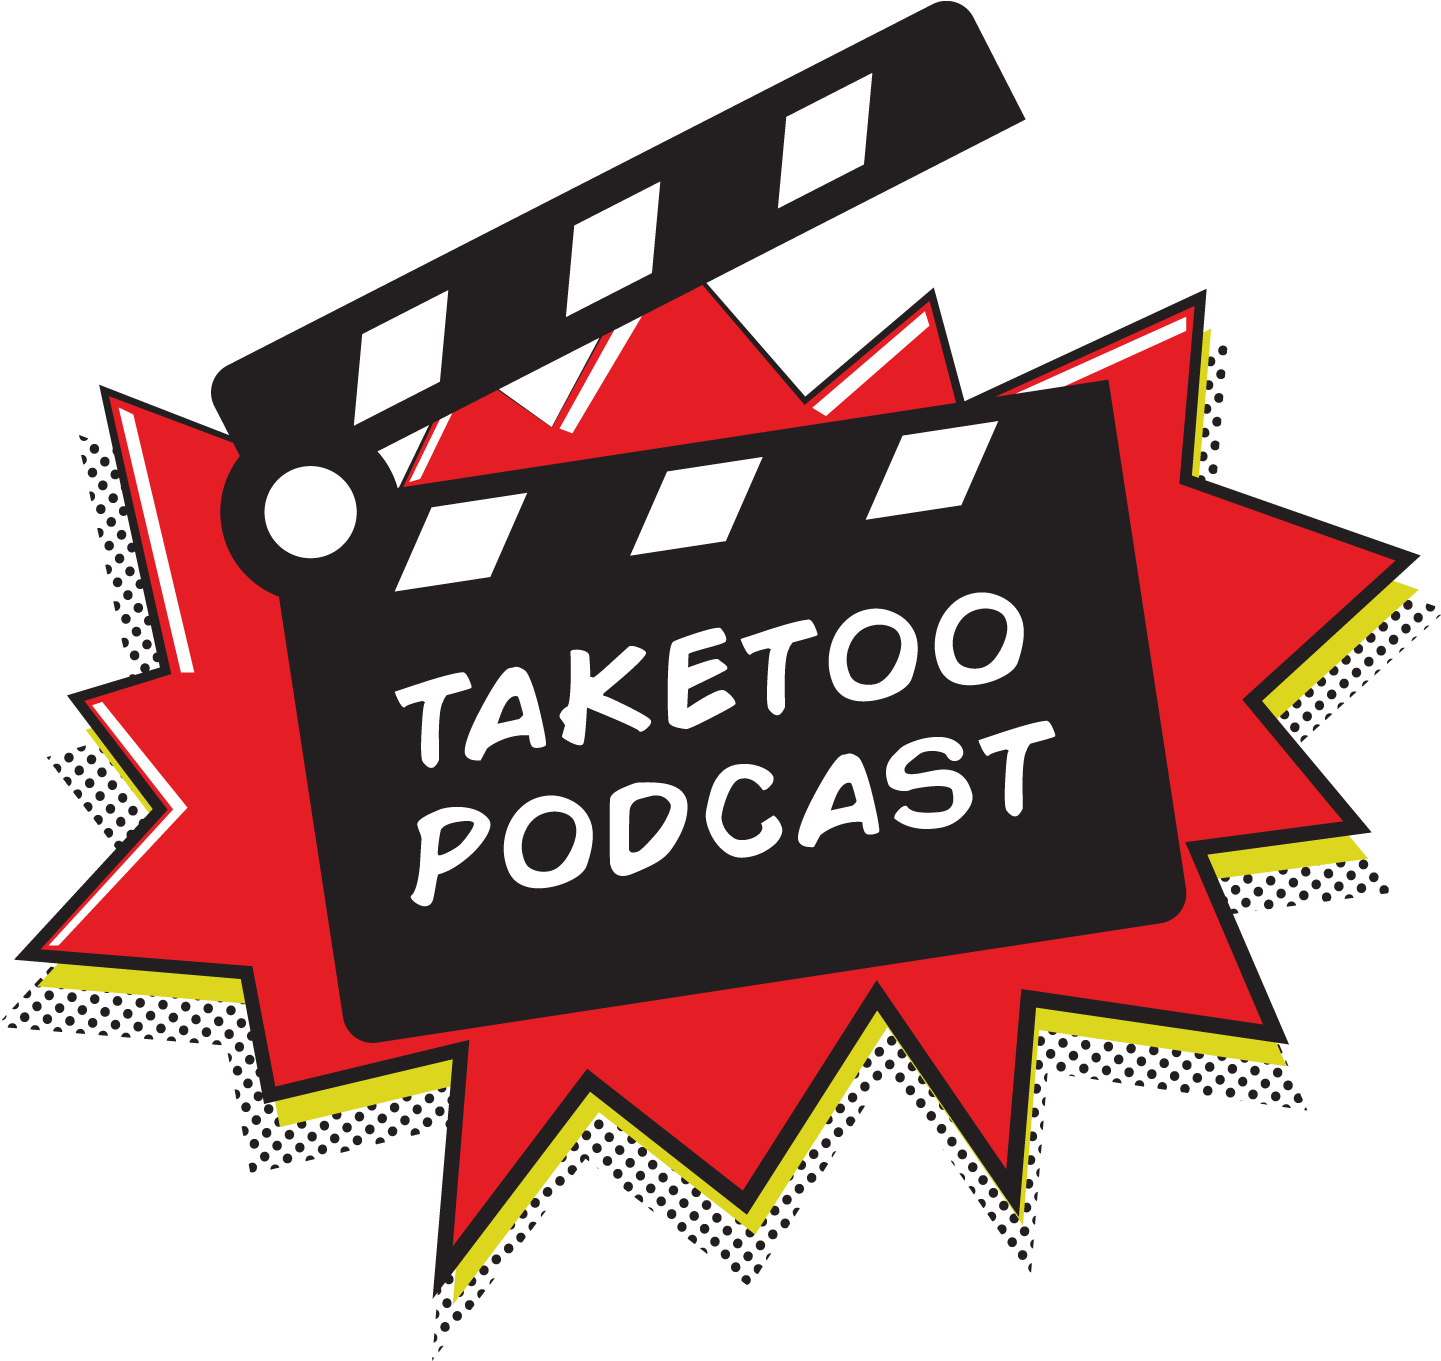 Take Too Podcast (1500x1500)